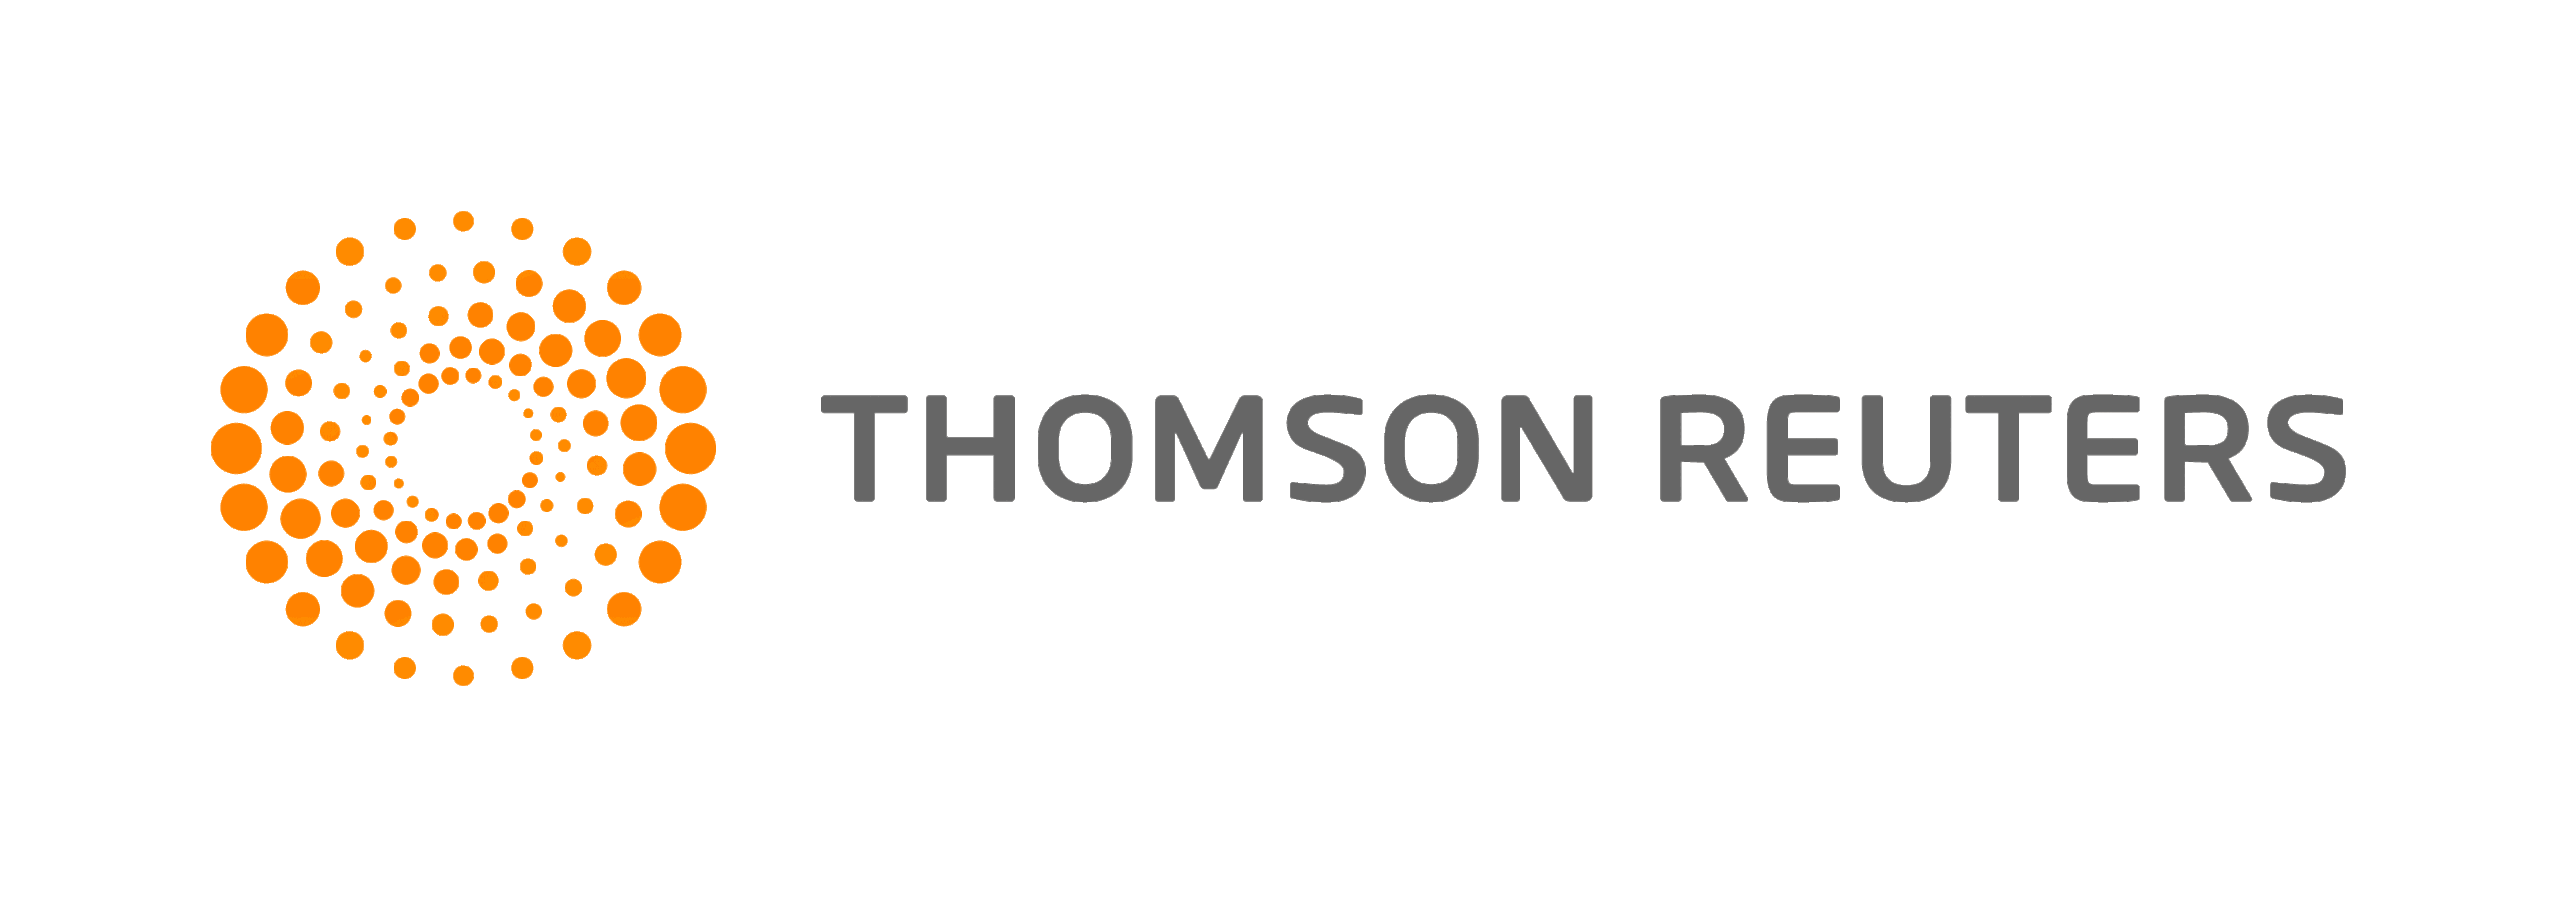 thomson_reuters